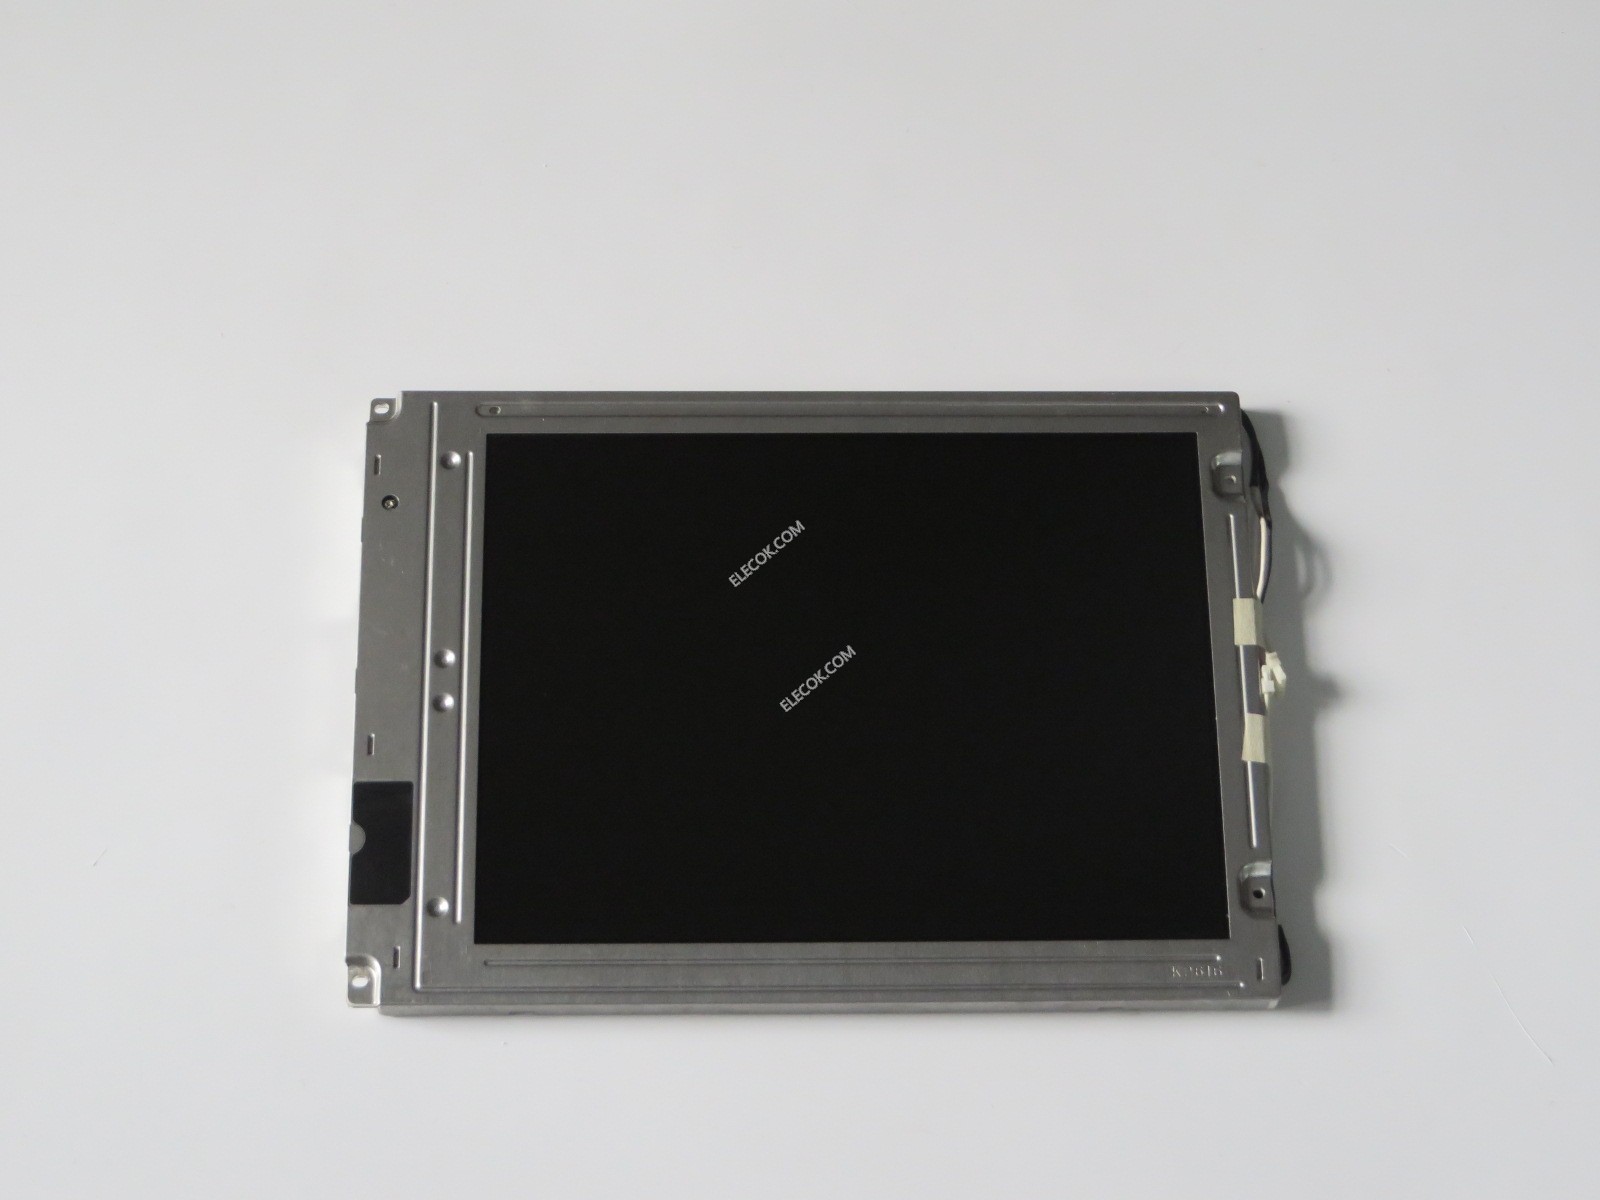 LCD Display LQ104V1DG11  a-Si TFT-LCD Panel 10.4" 640*480 for SHARP